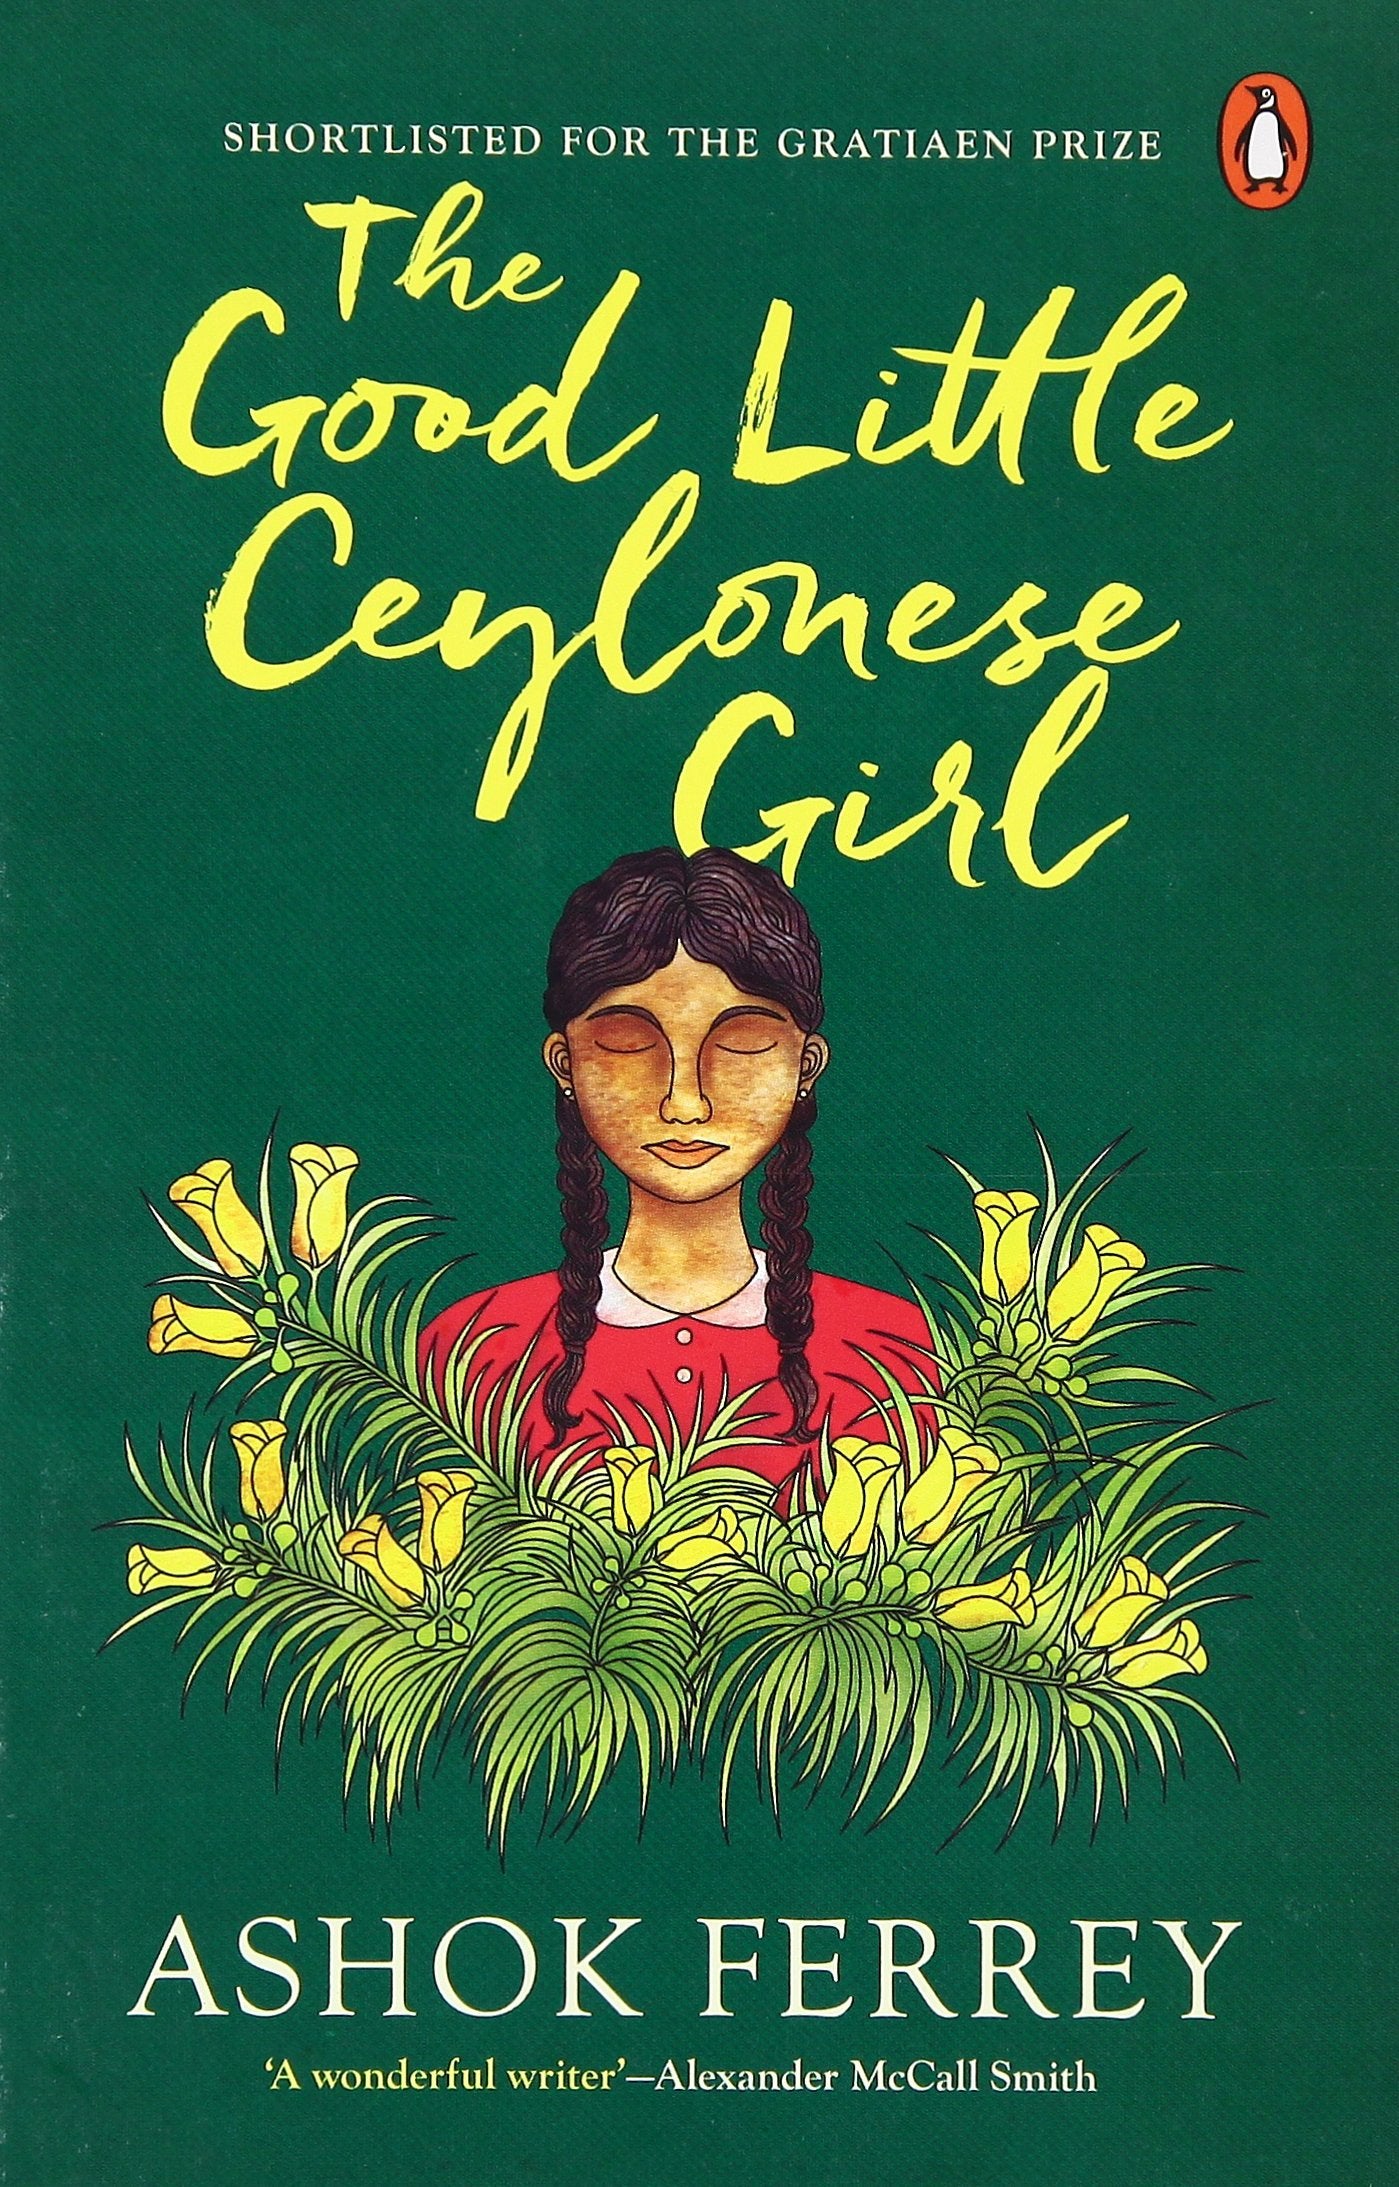 The Good Little Ceylonese Girl by Ashok Ferrey